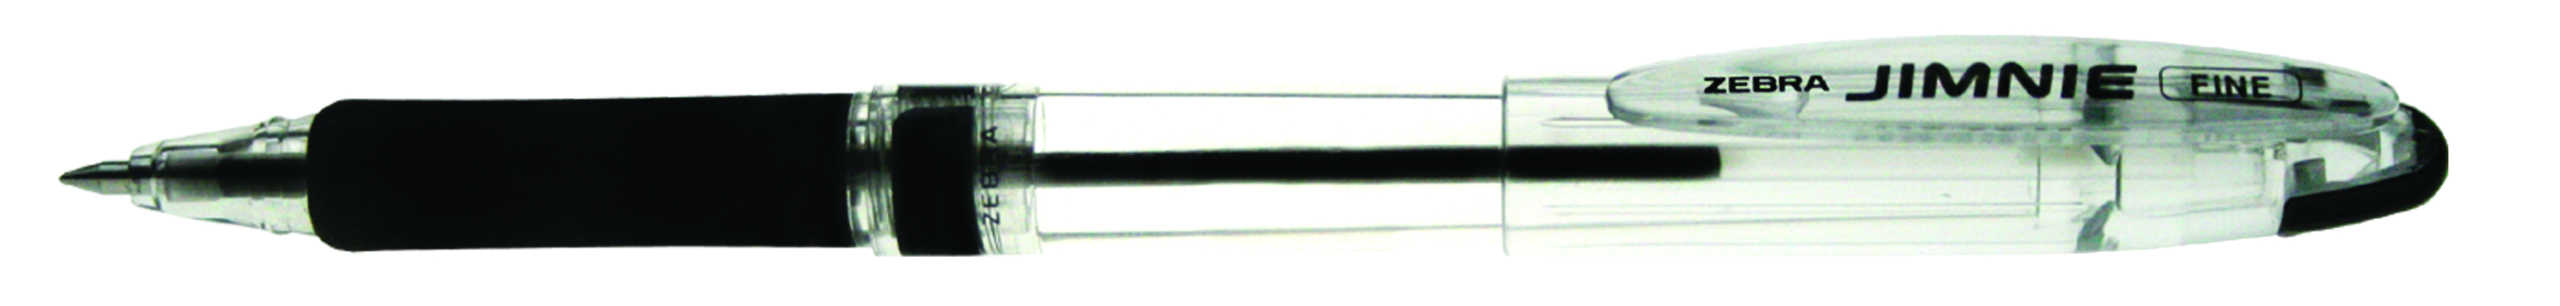 Jimnie Classic ballpoint pen 1